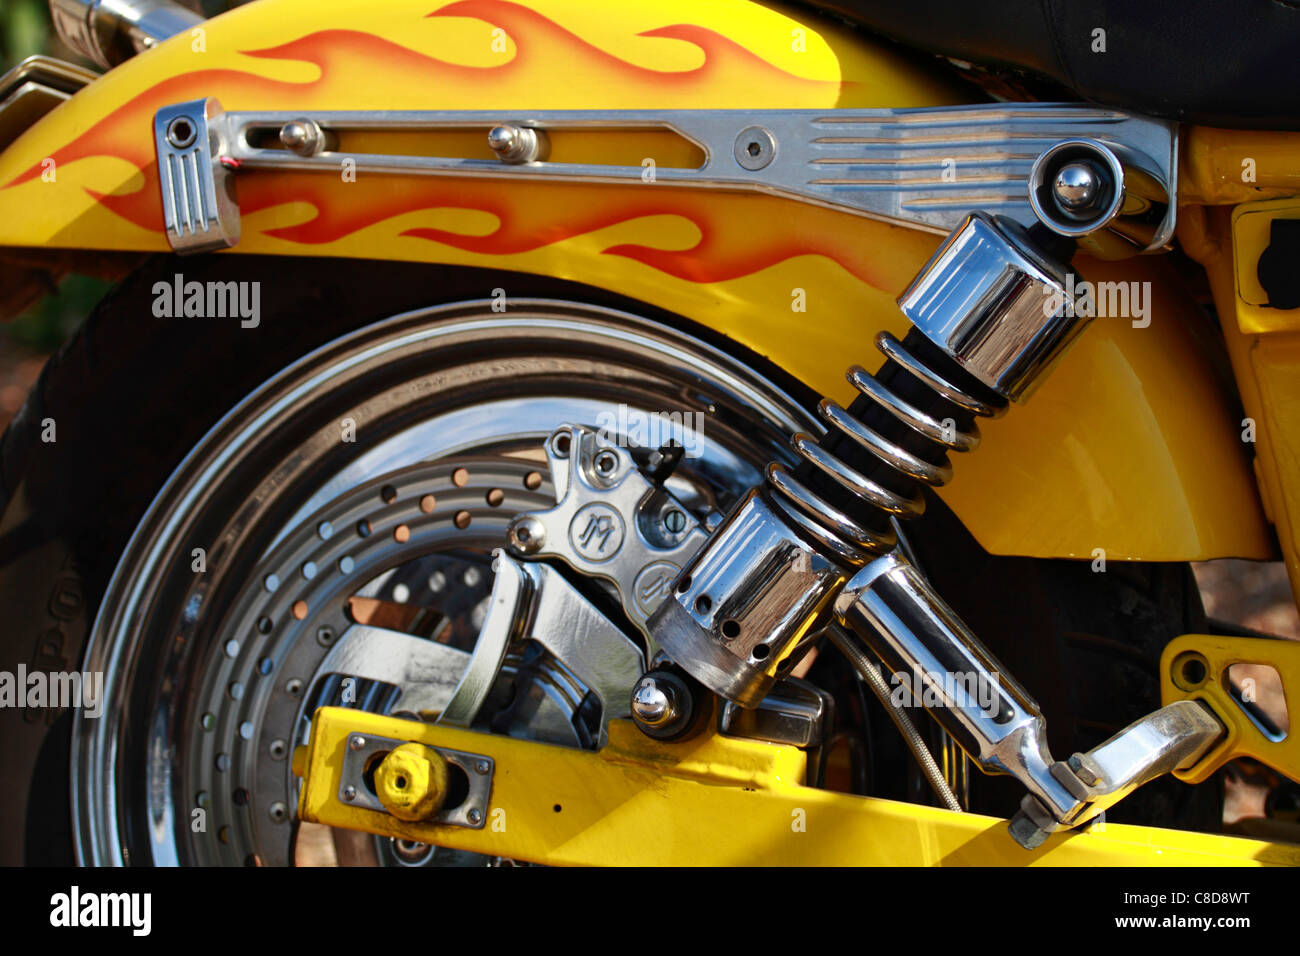 Custom bike, rear wheel detail Stock Photo